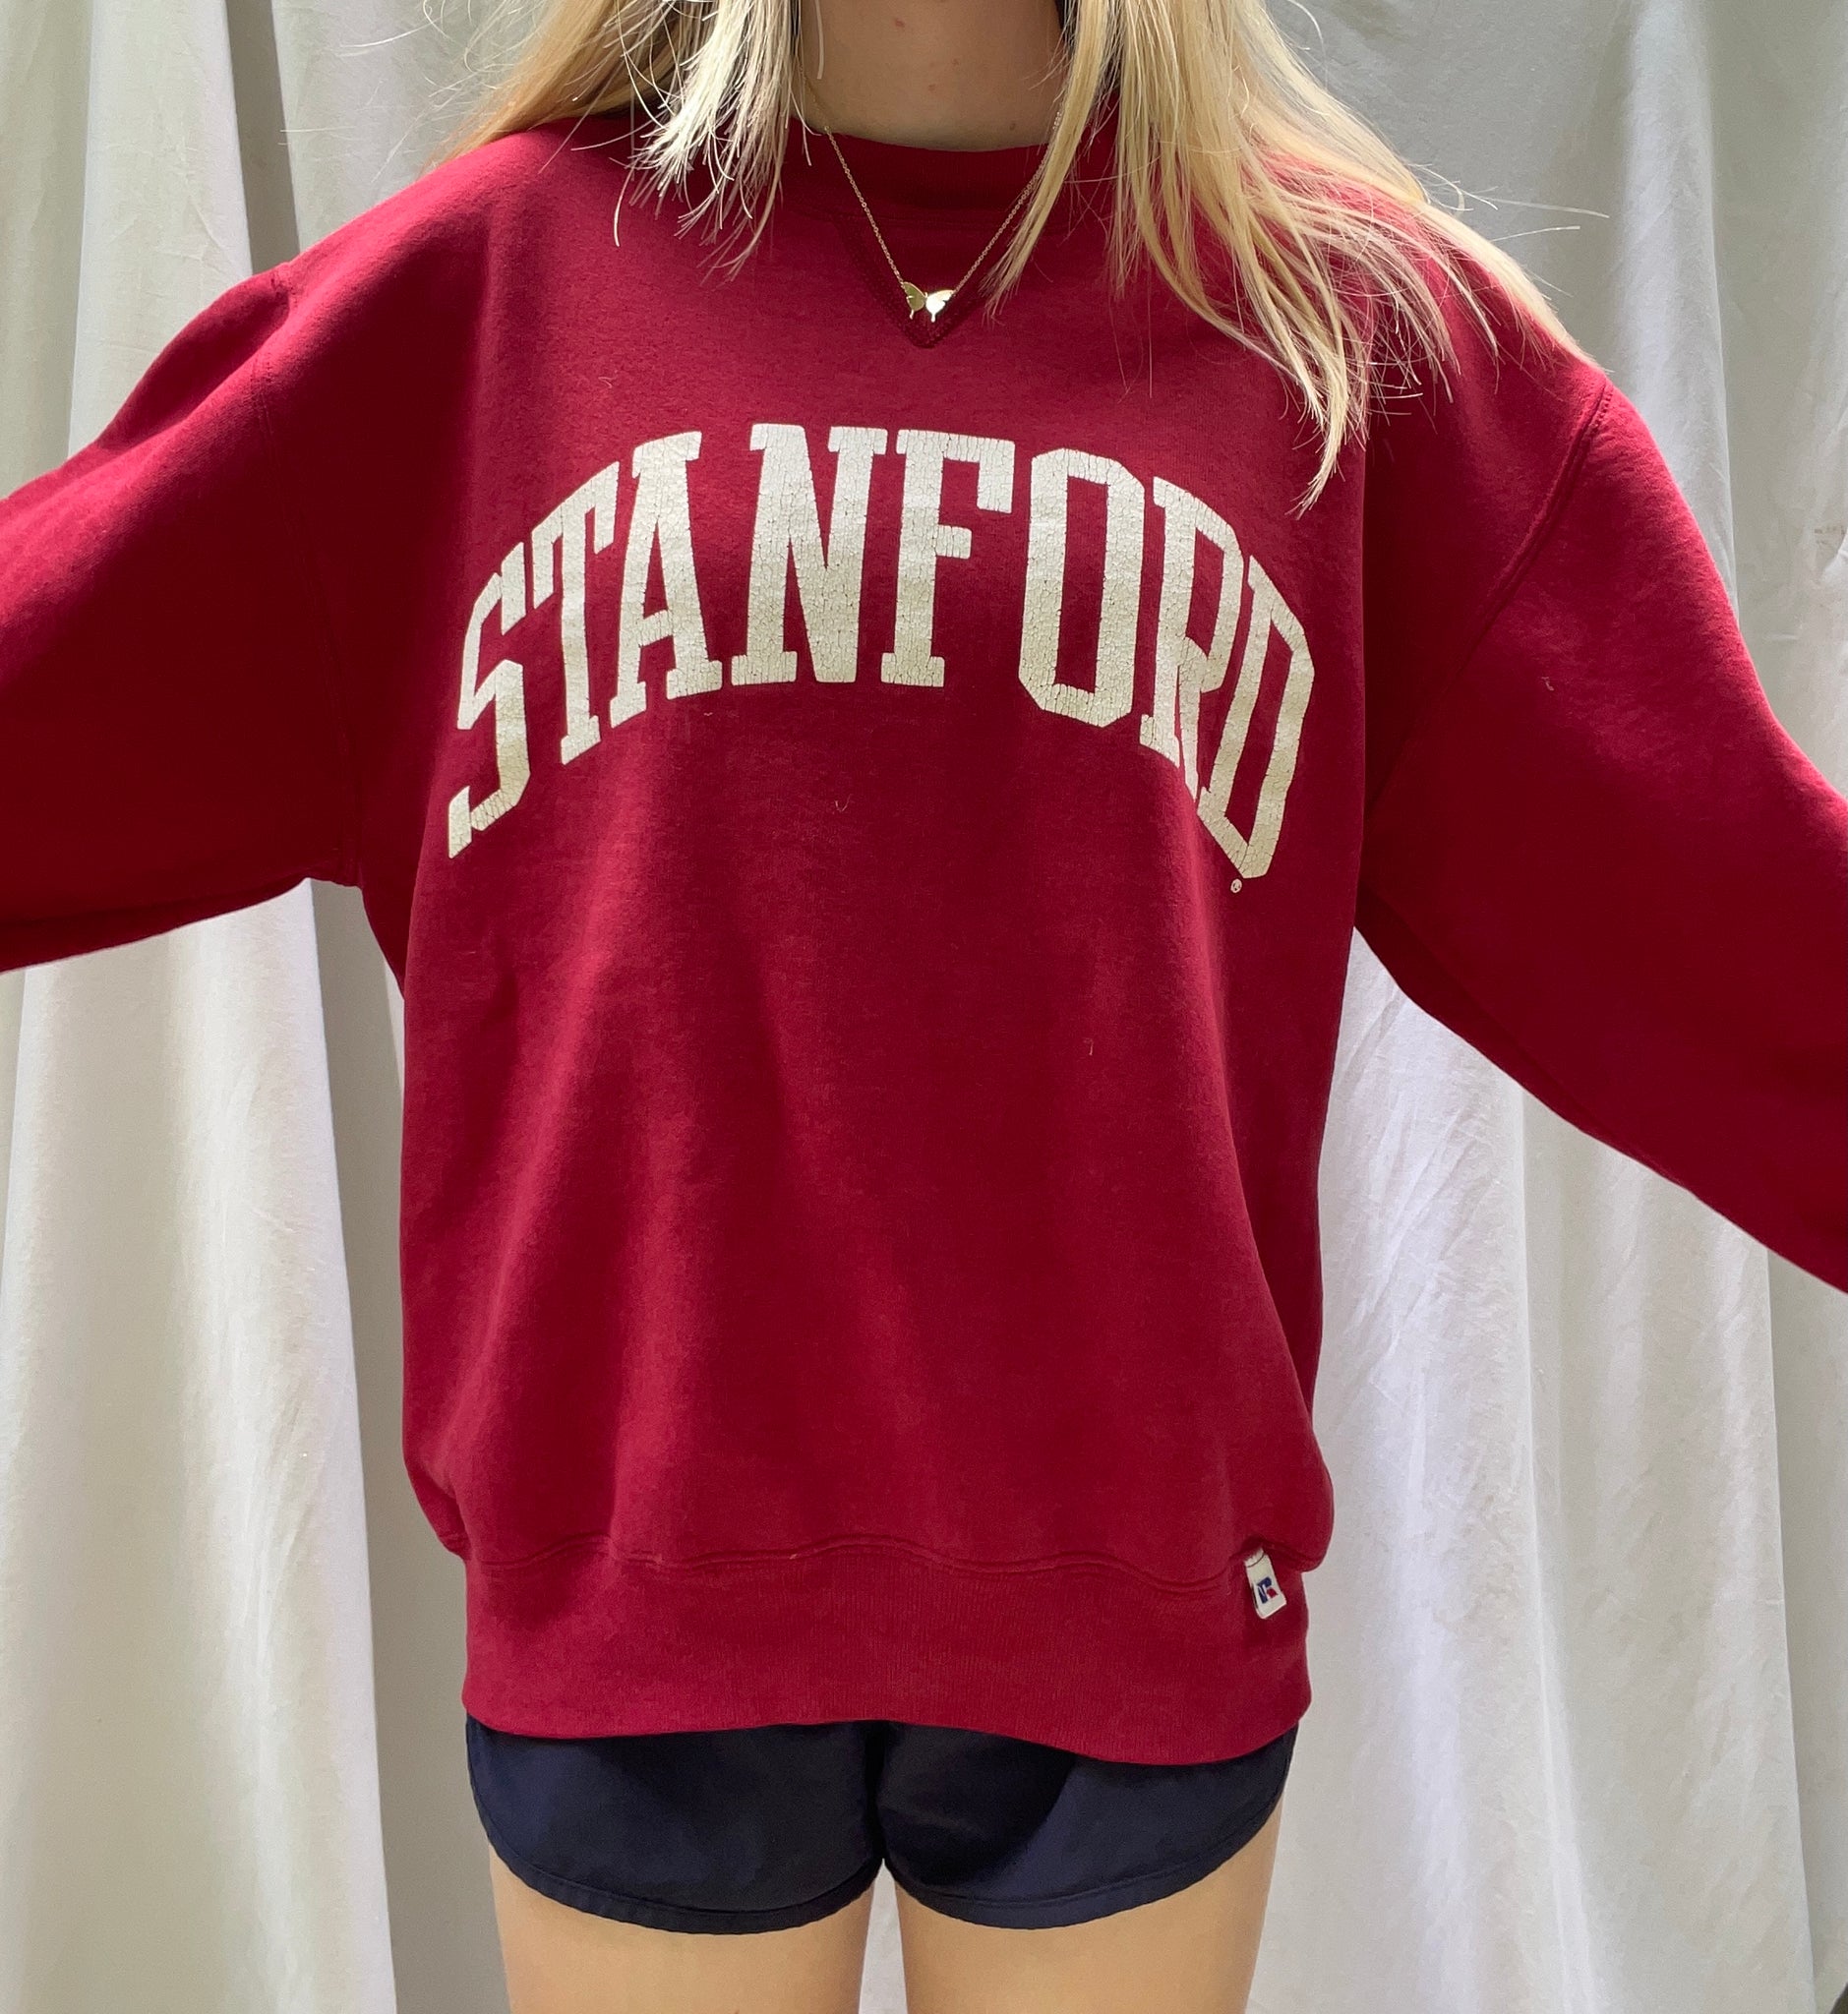 S) Stanford Sweatshirt – Happyy.thrifts